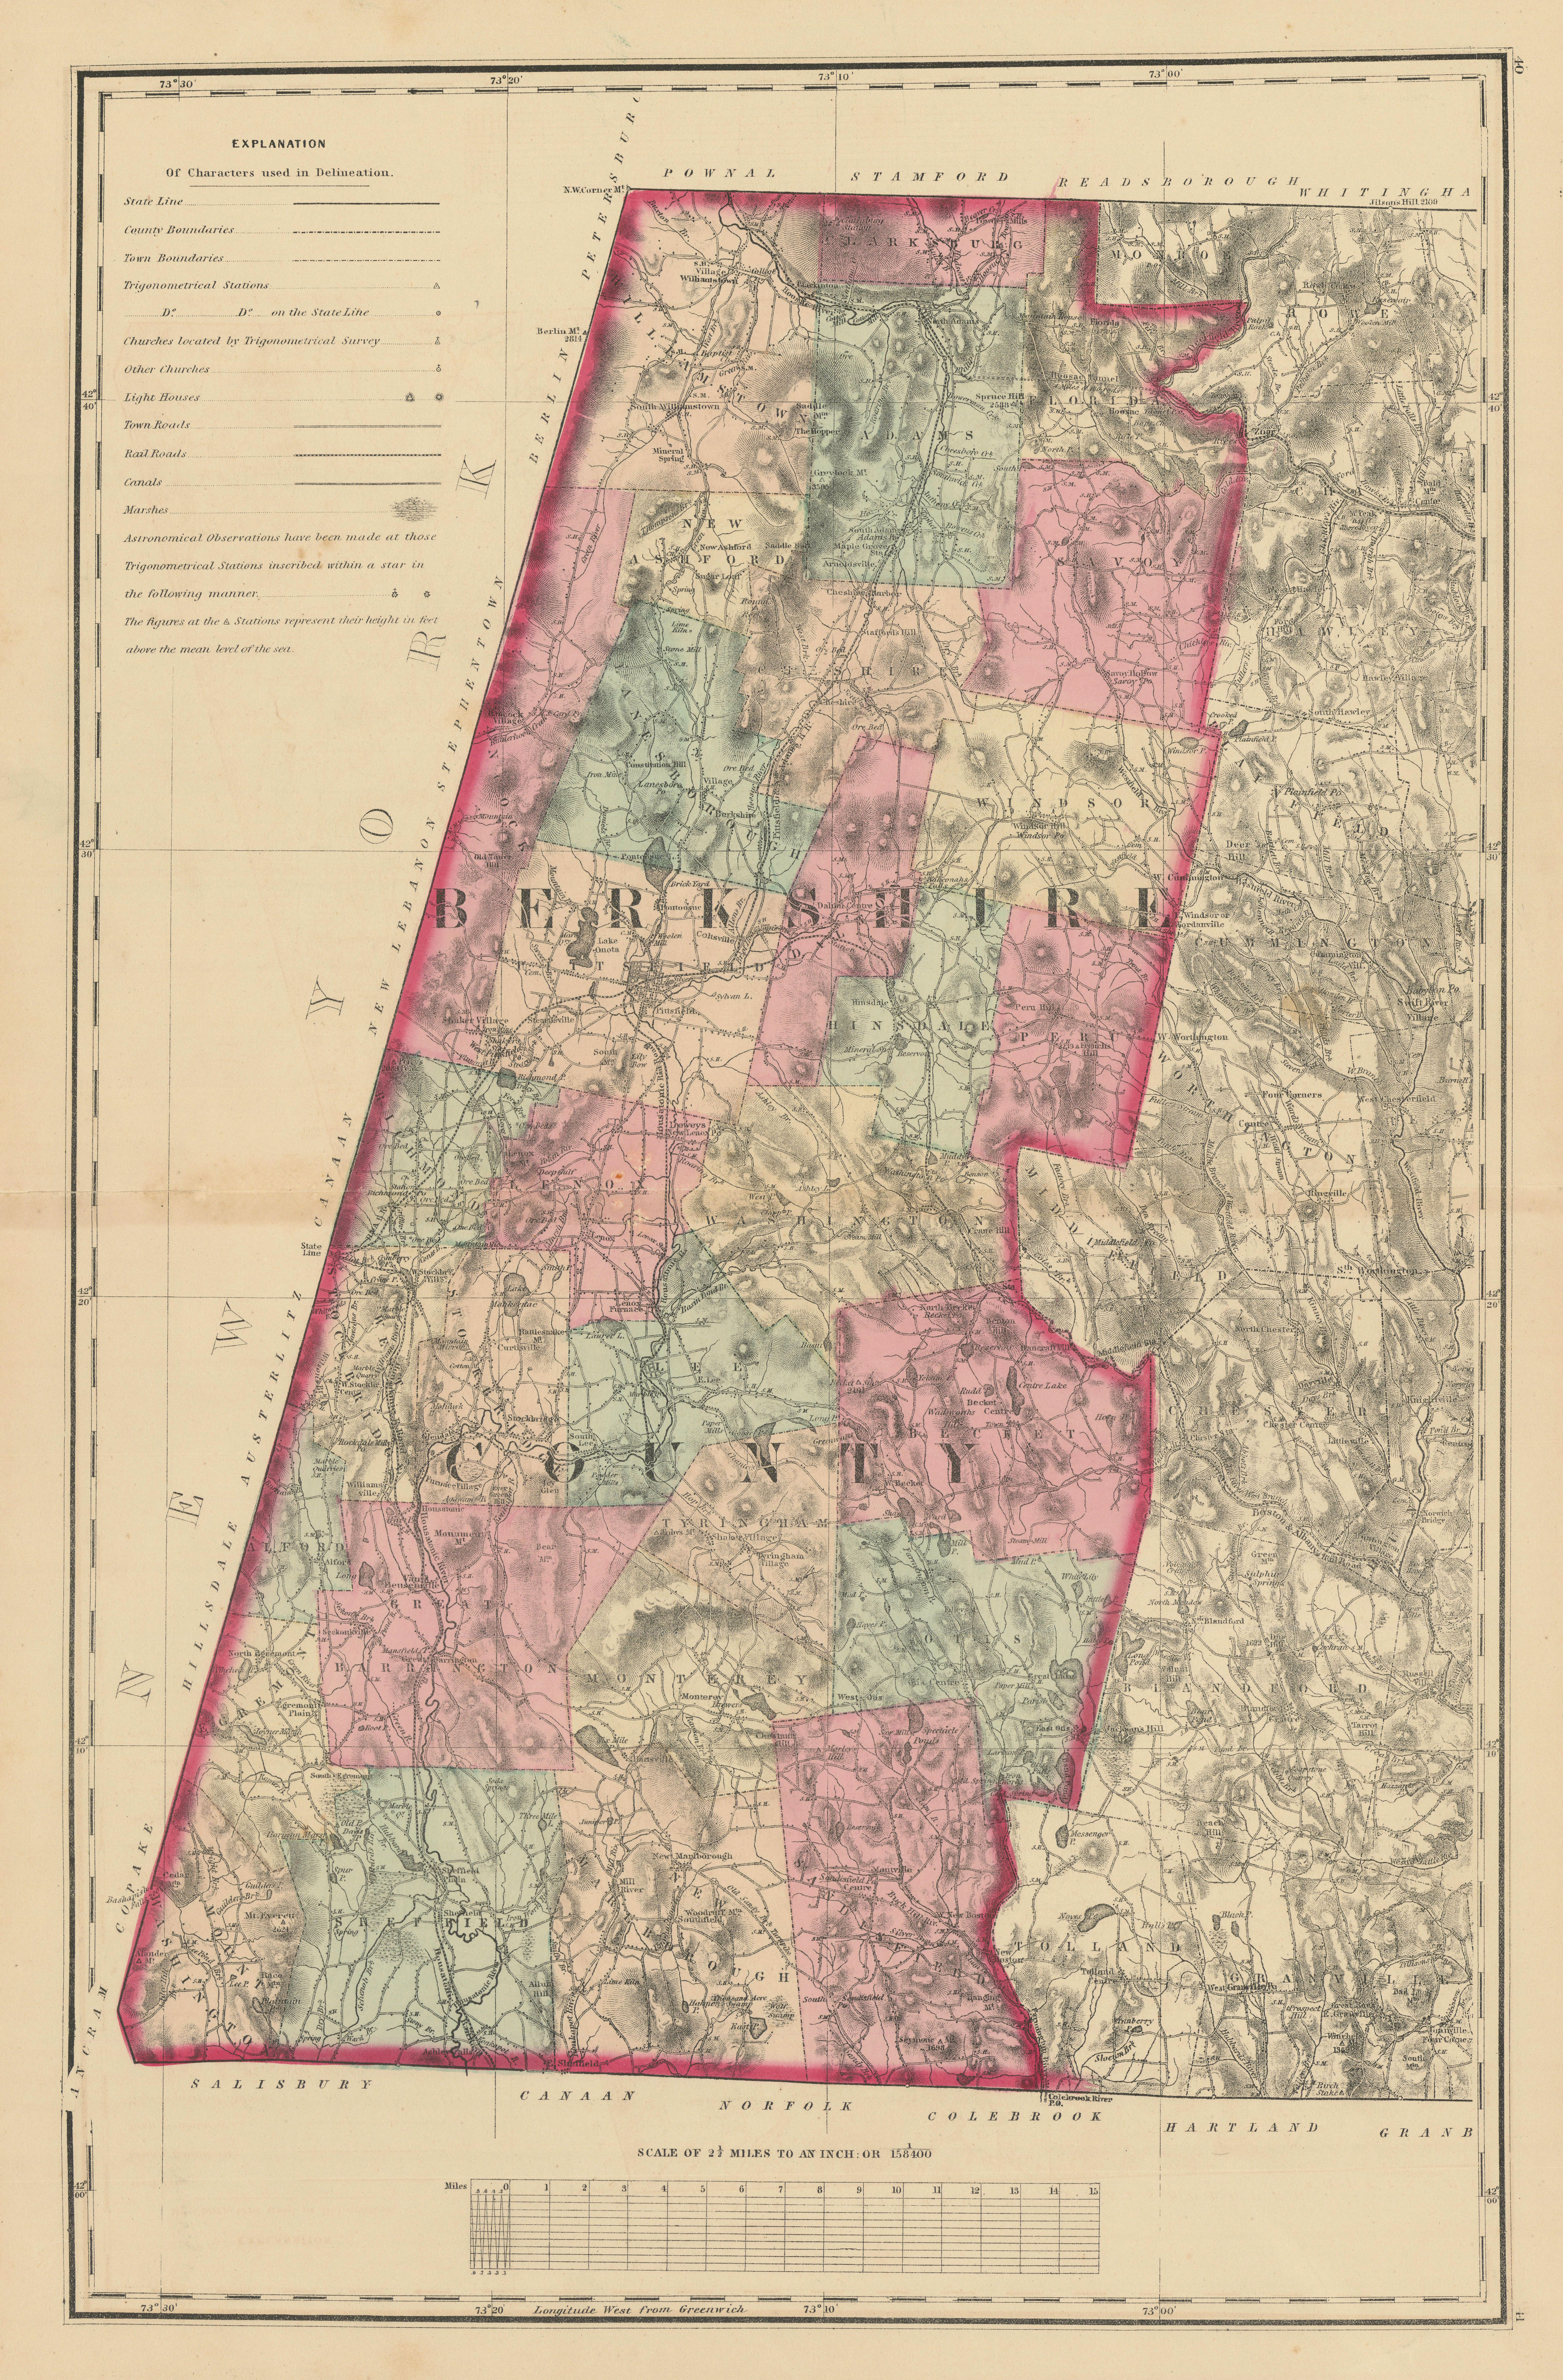 Associate Product Berkshire County, Massachusetts. WALLING & GRAY 1871 old antique map chart